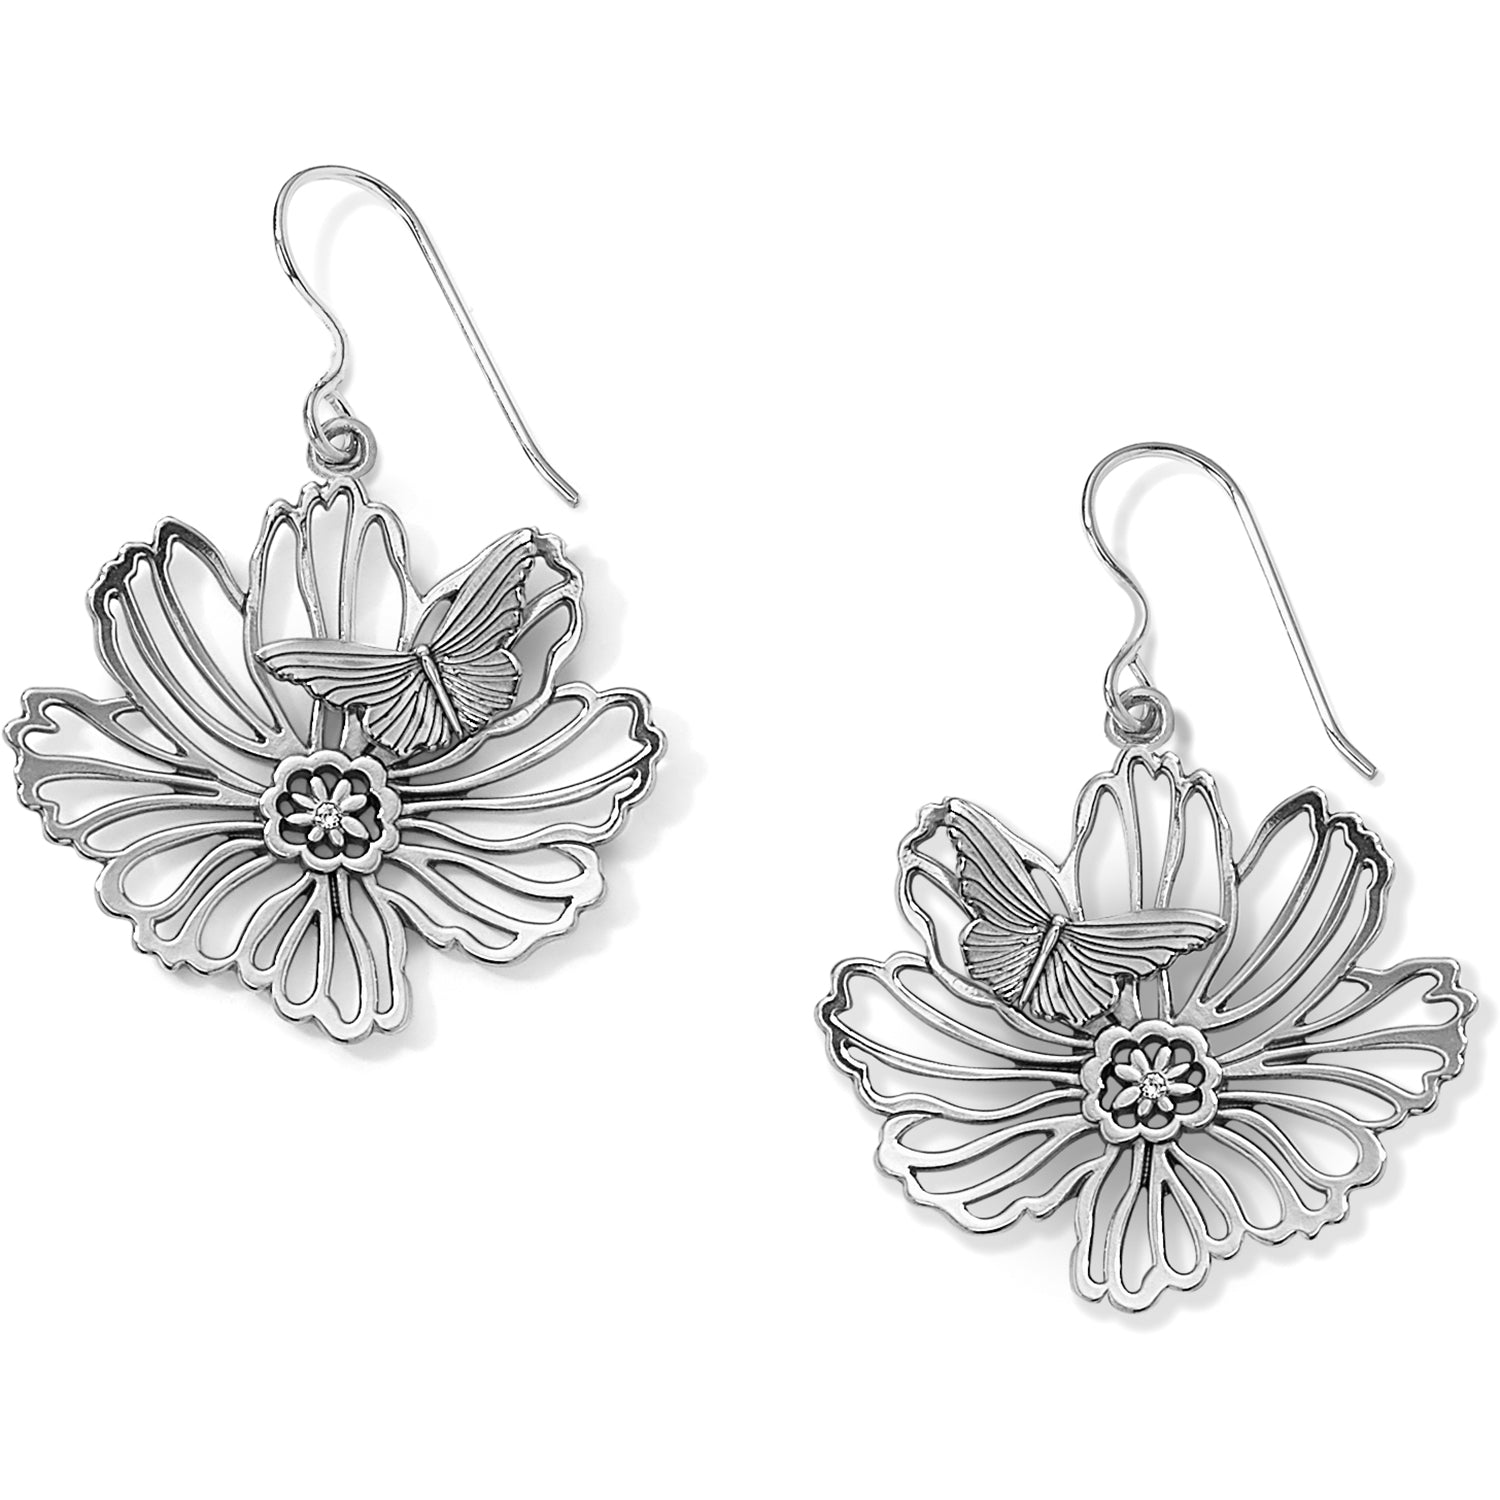 Enchanted Garden French Wire Earrings - Jewelry - SierraLily